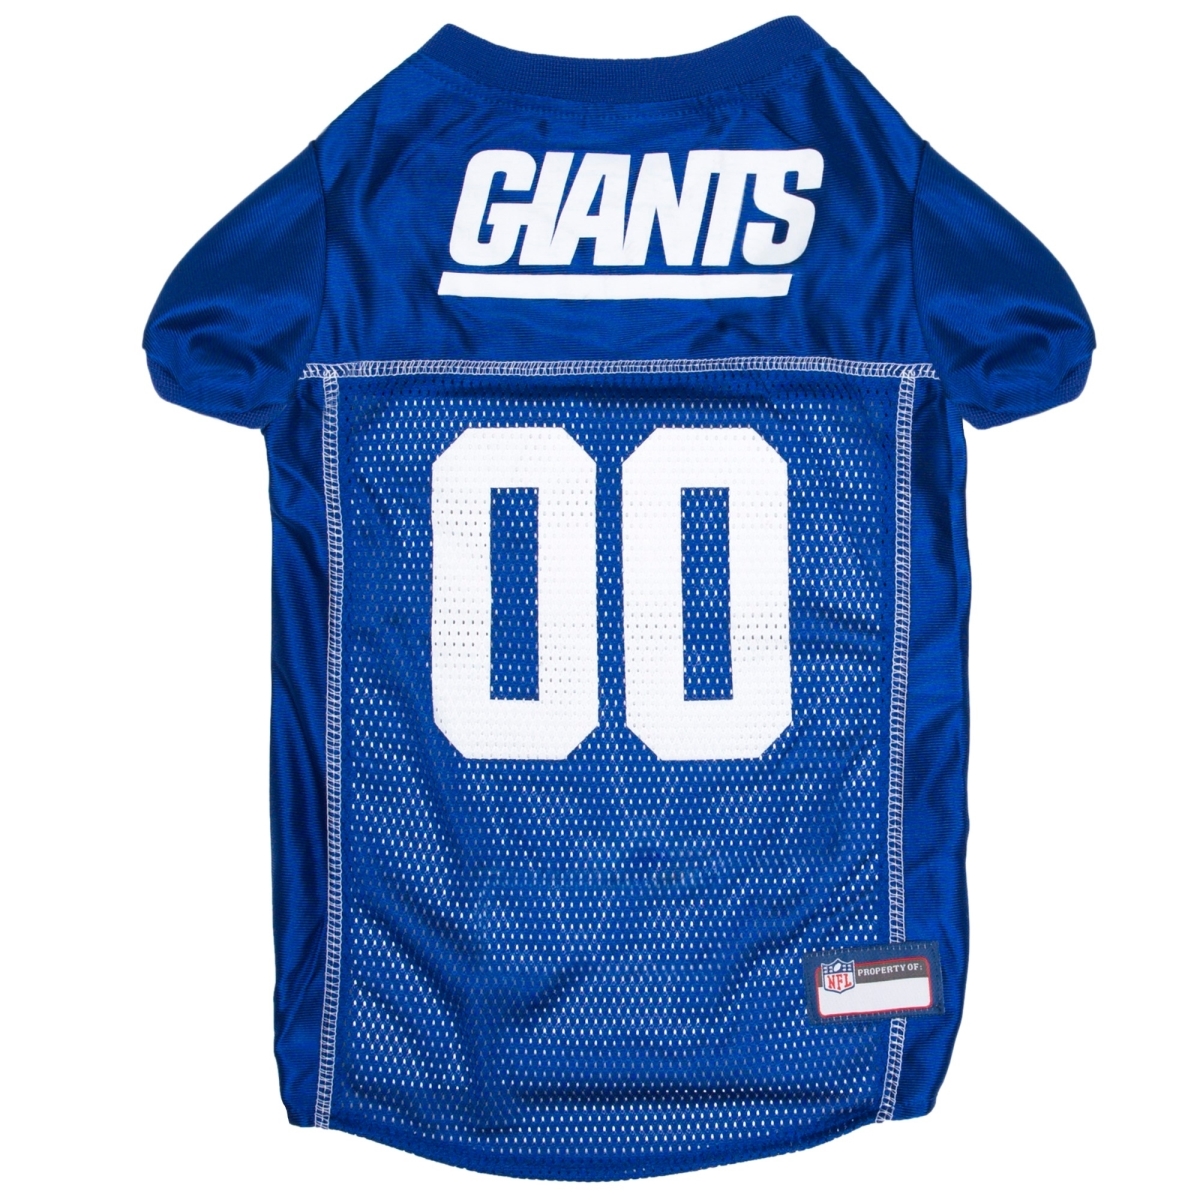 Dgnyg-4006-m New York Giants Dog Jersey, Blue - Medium